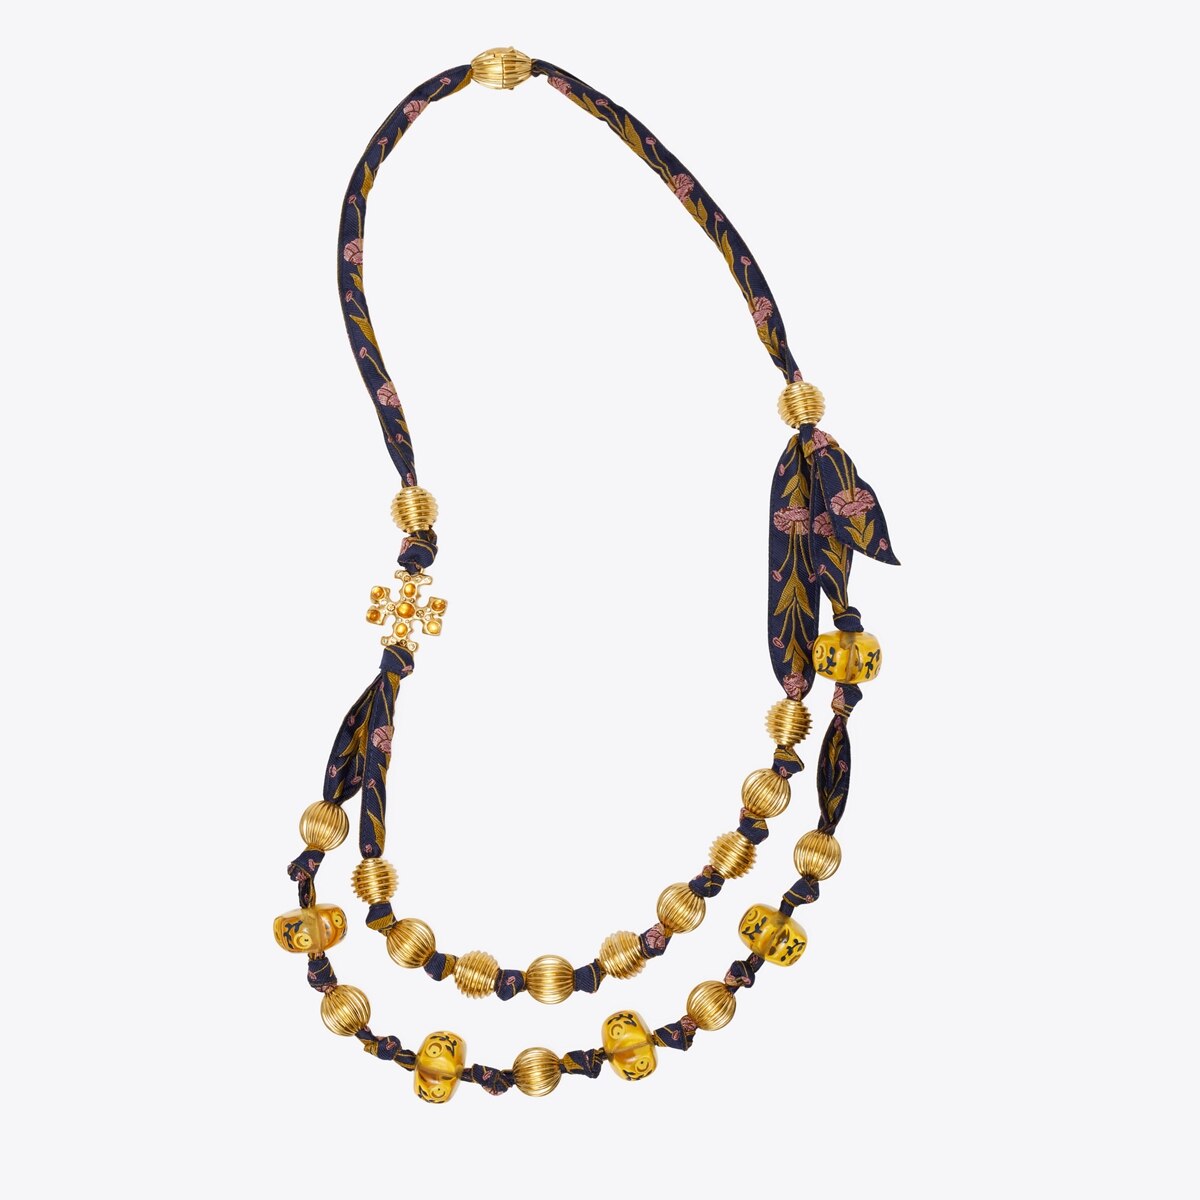 Jaquard necklace